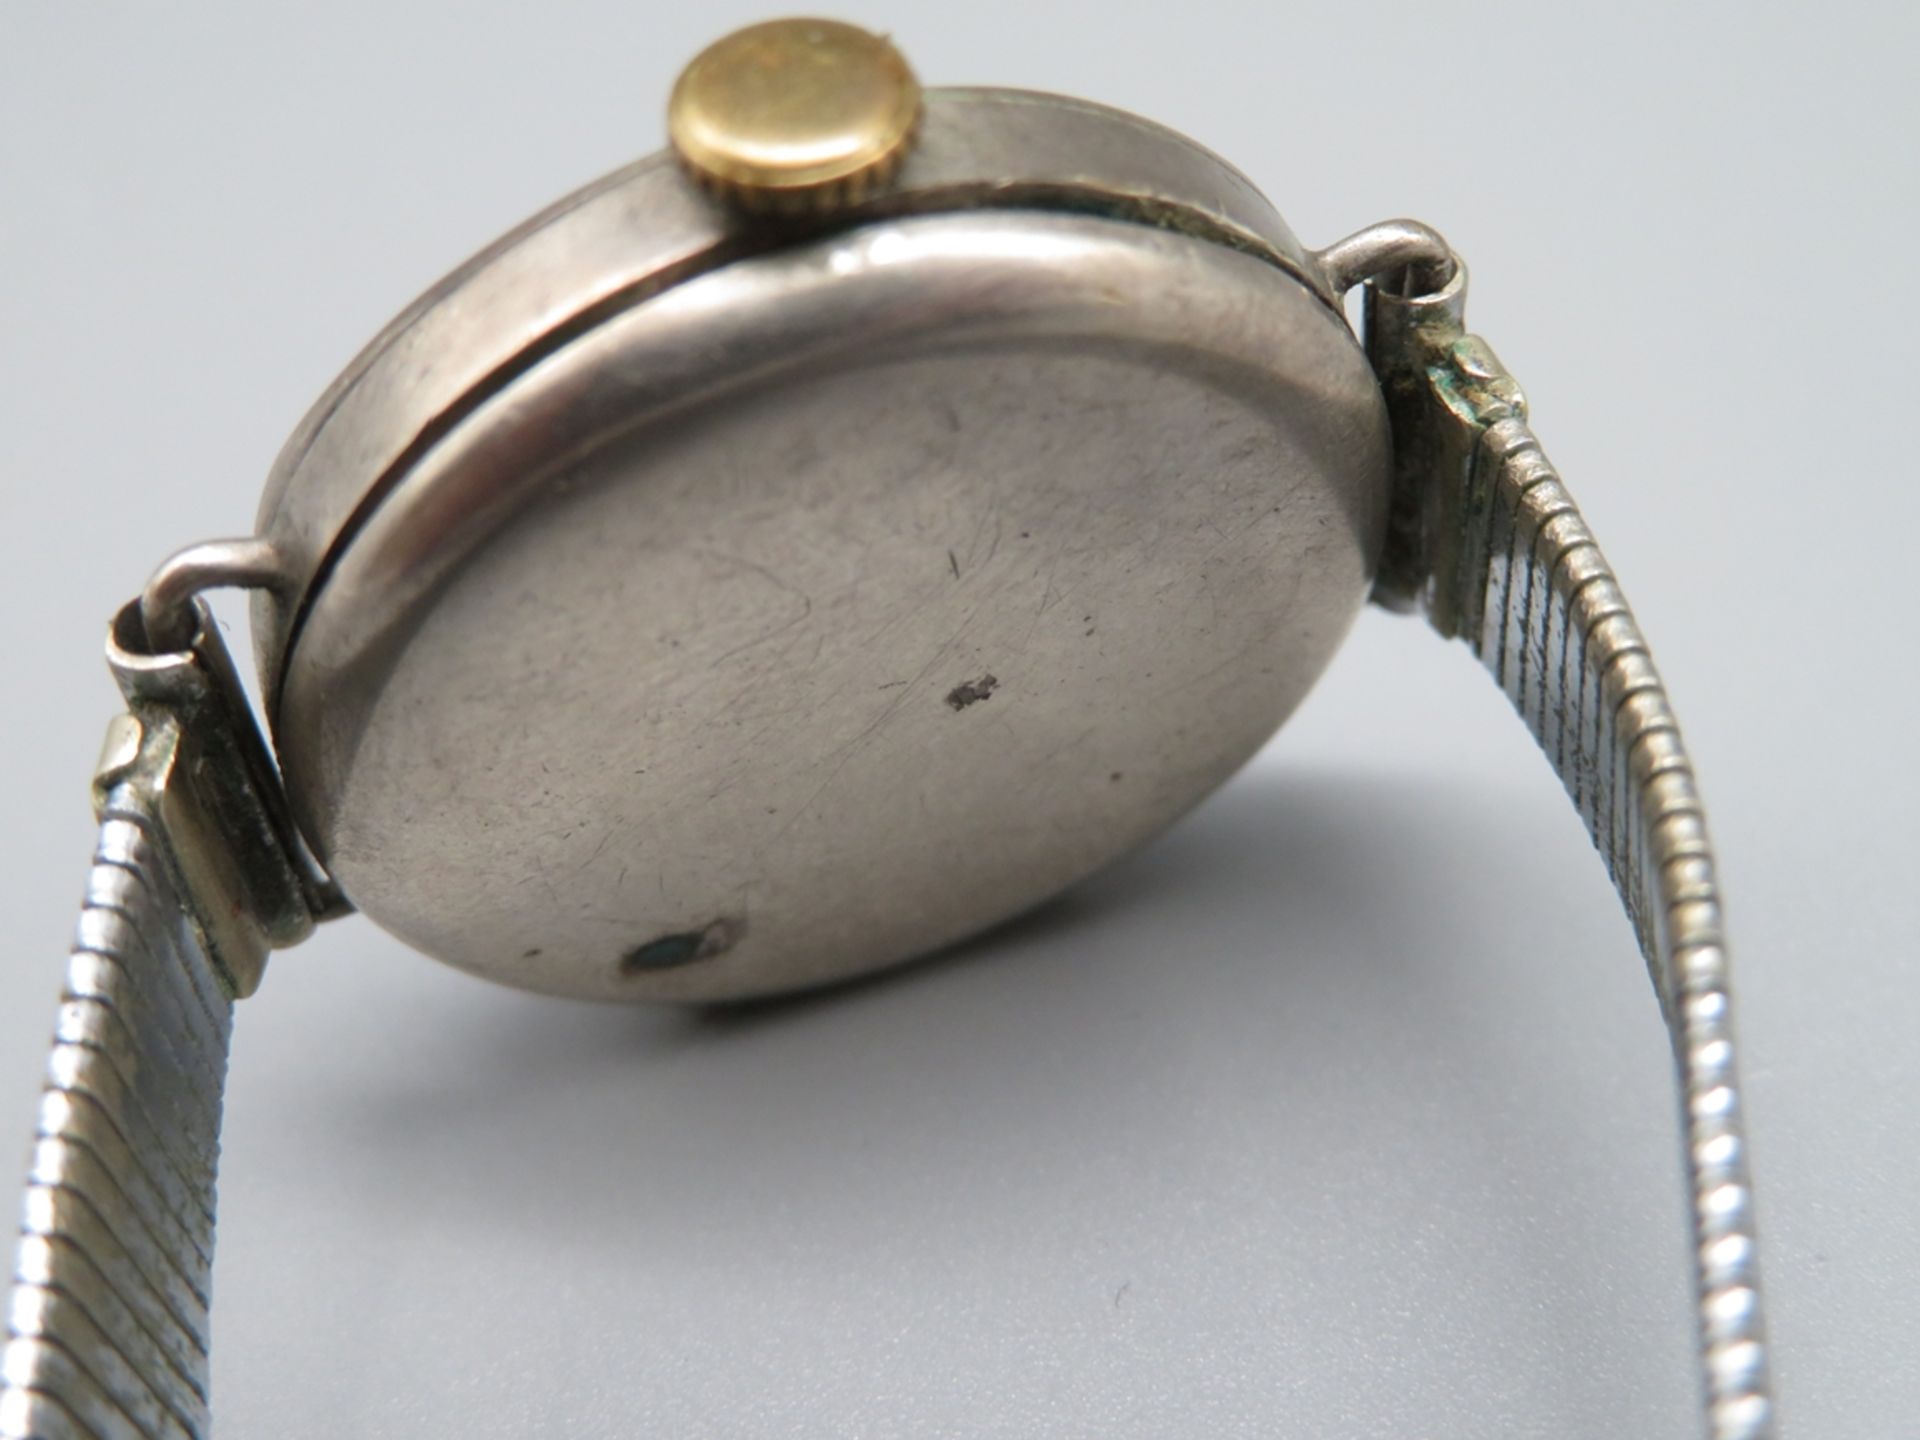 DAU, um 1920, Silber 800/000, punziert, Ankerwerk, Metallglieder-Armband, Verzierungen in Thula-Sil - Image 2 of 2